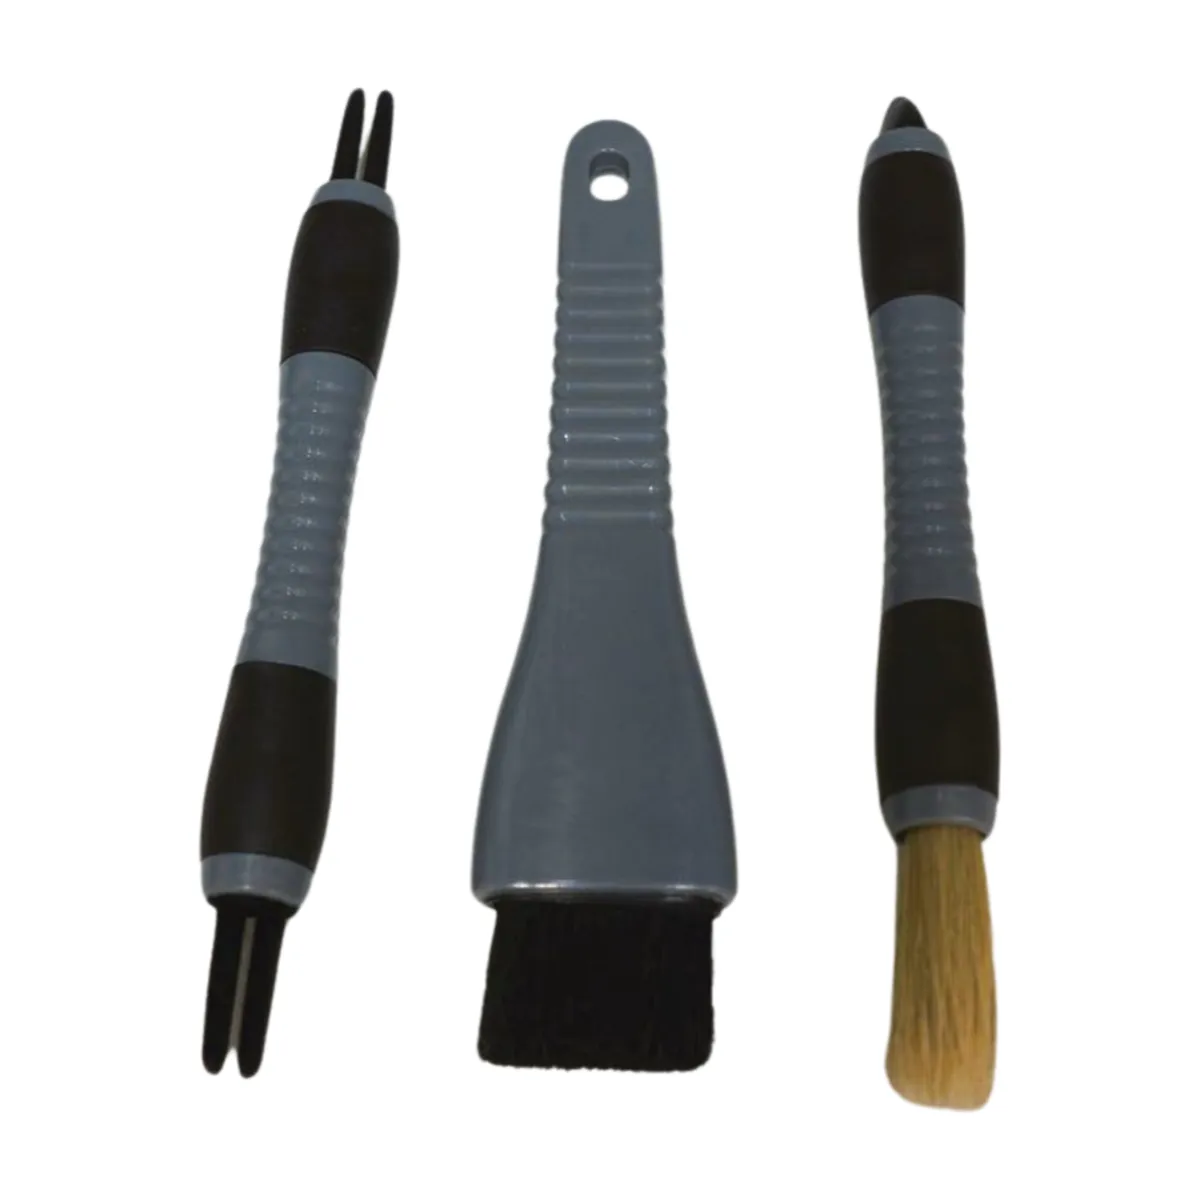 Interior Detail Brush Set - Precision Brushes for Car Interiors